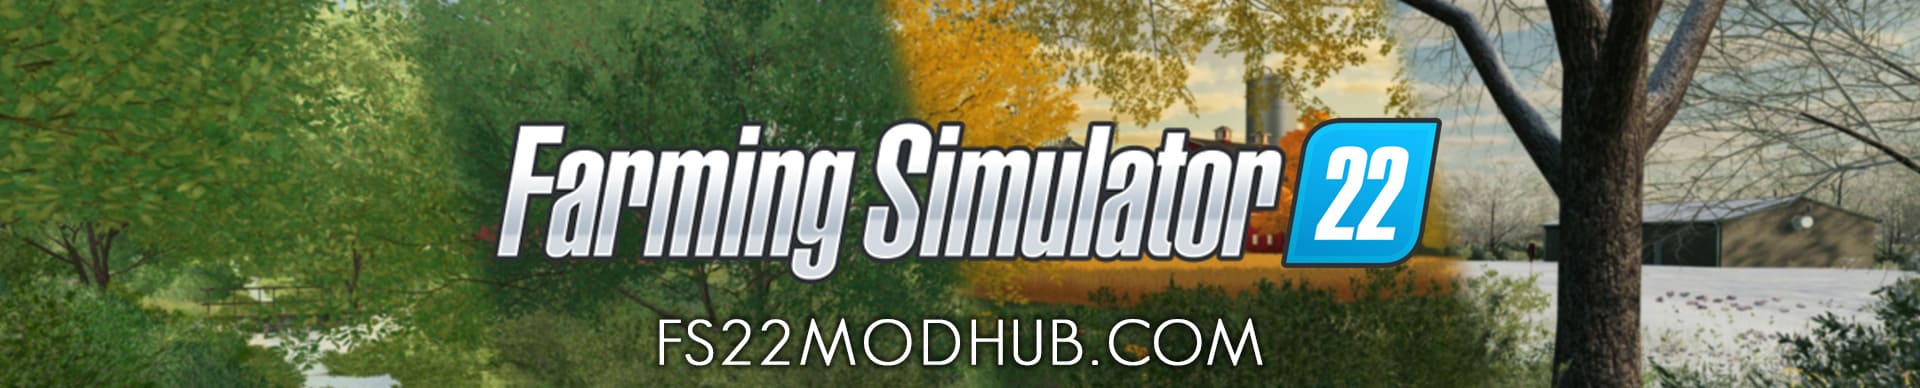 Farming Simulator 22: How to fill Seeder? | FS22 where to buy Fertilizer?